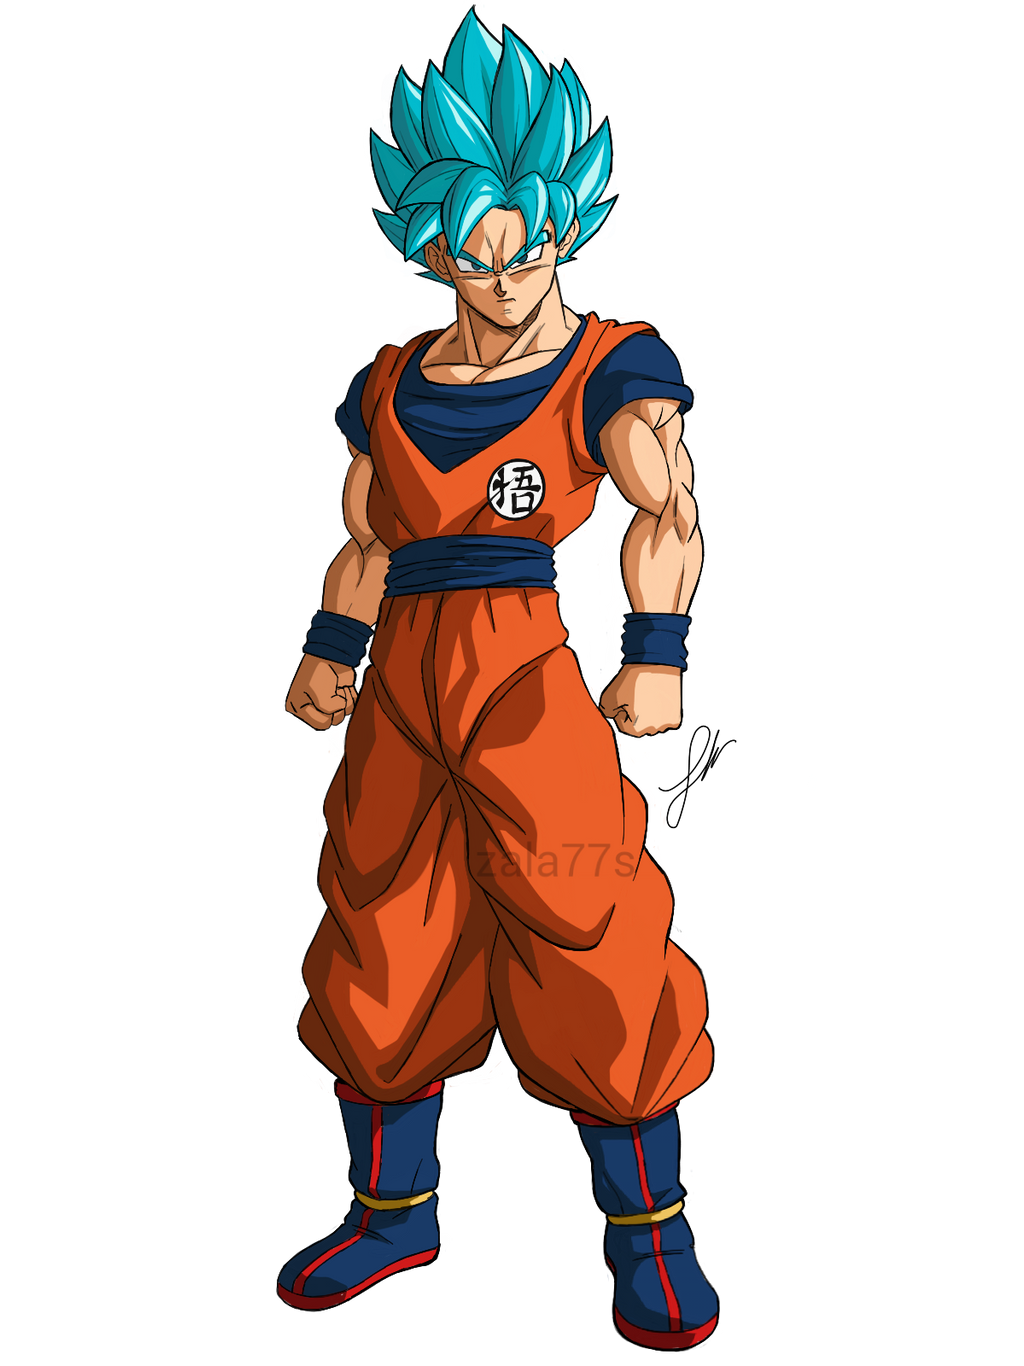 Son Goku Super Saiyan Blue by crismarshall on DeviantArt